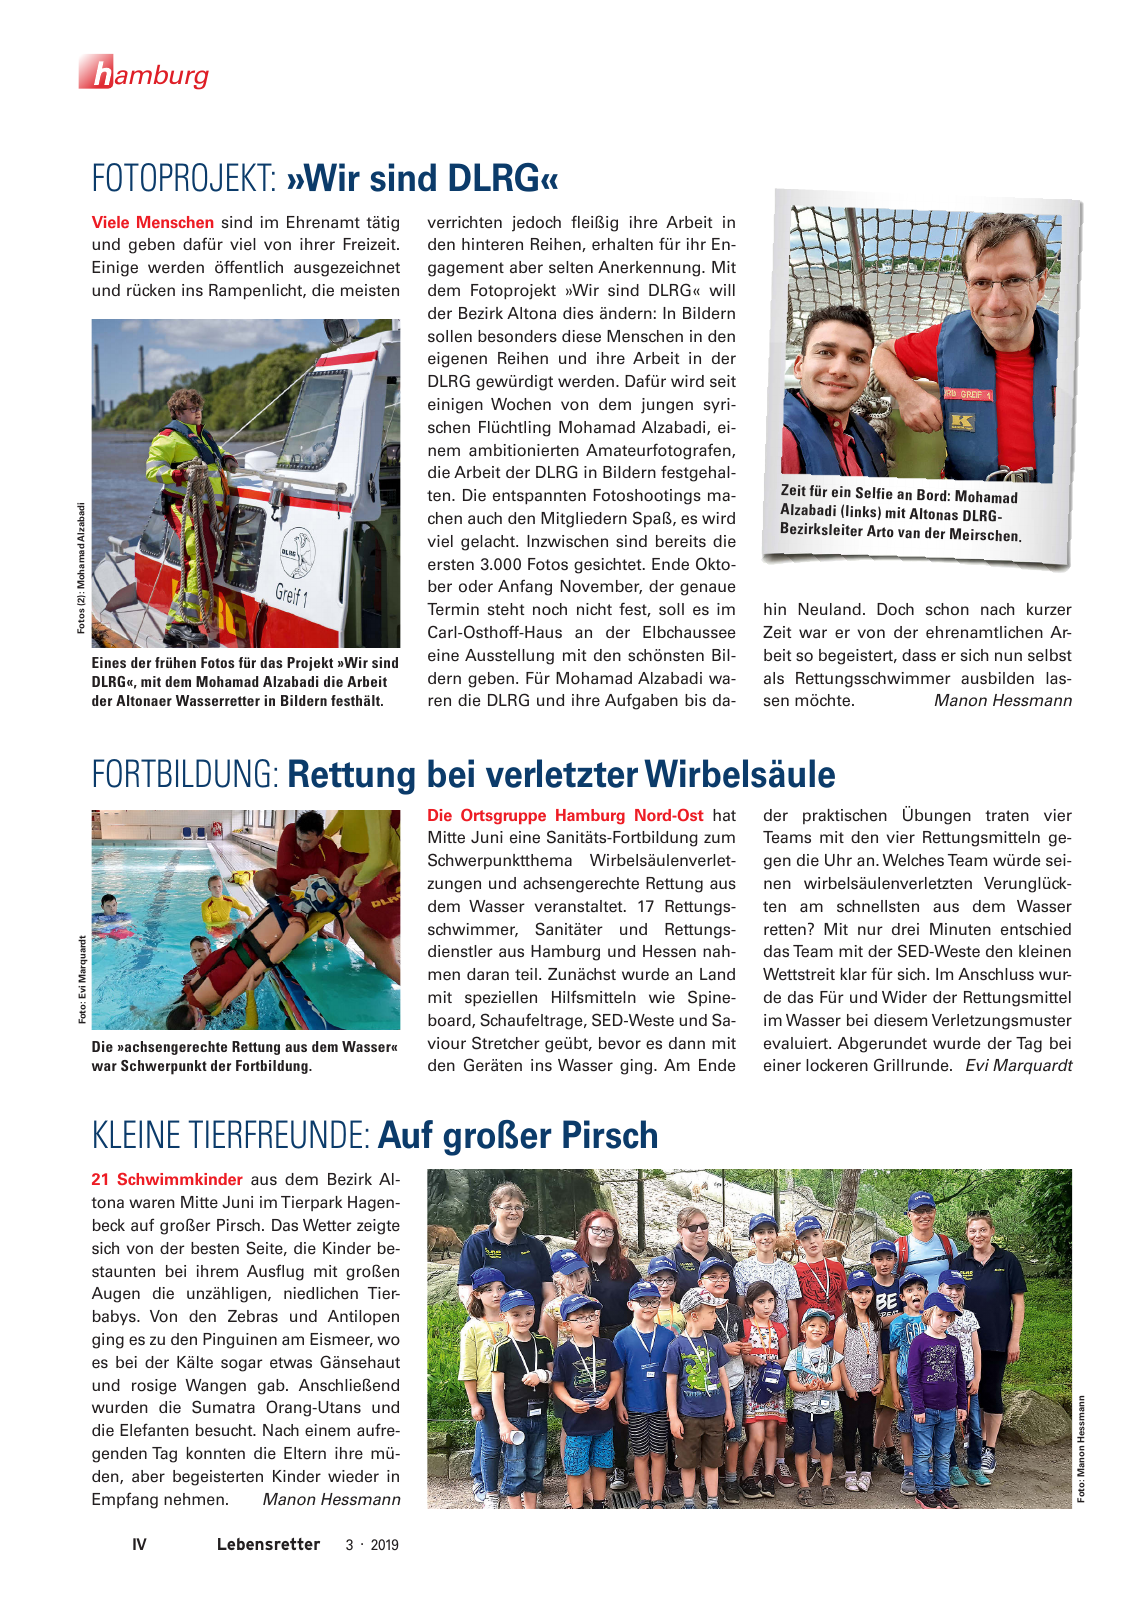 Vorschau Lebensretter 3/2019 - Hamburg Regionalausgabe Seite 6